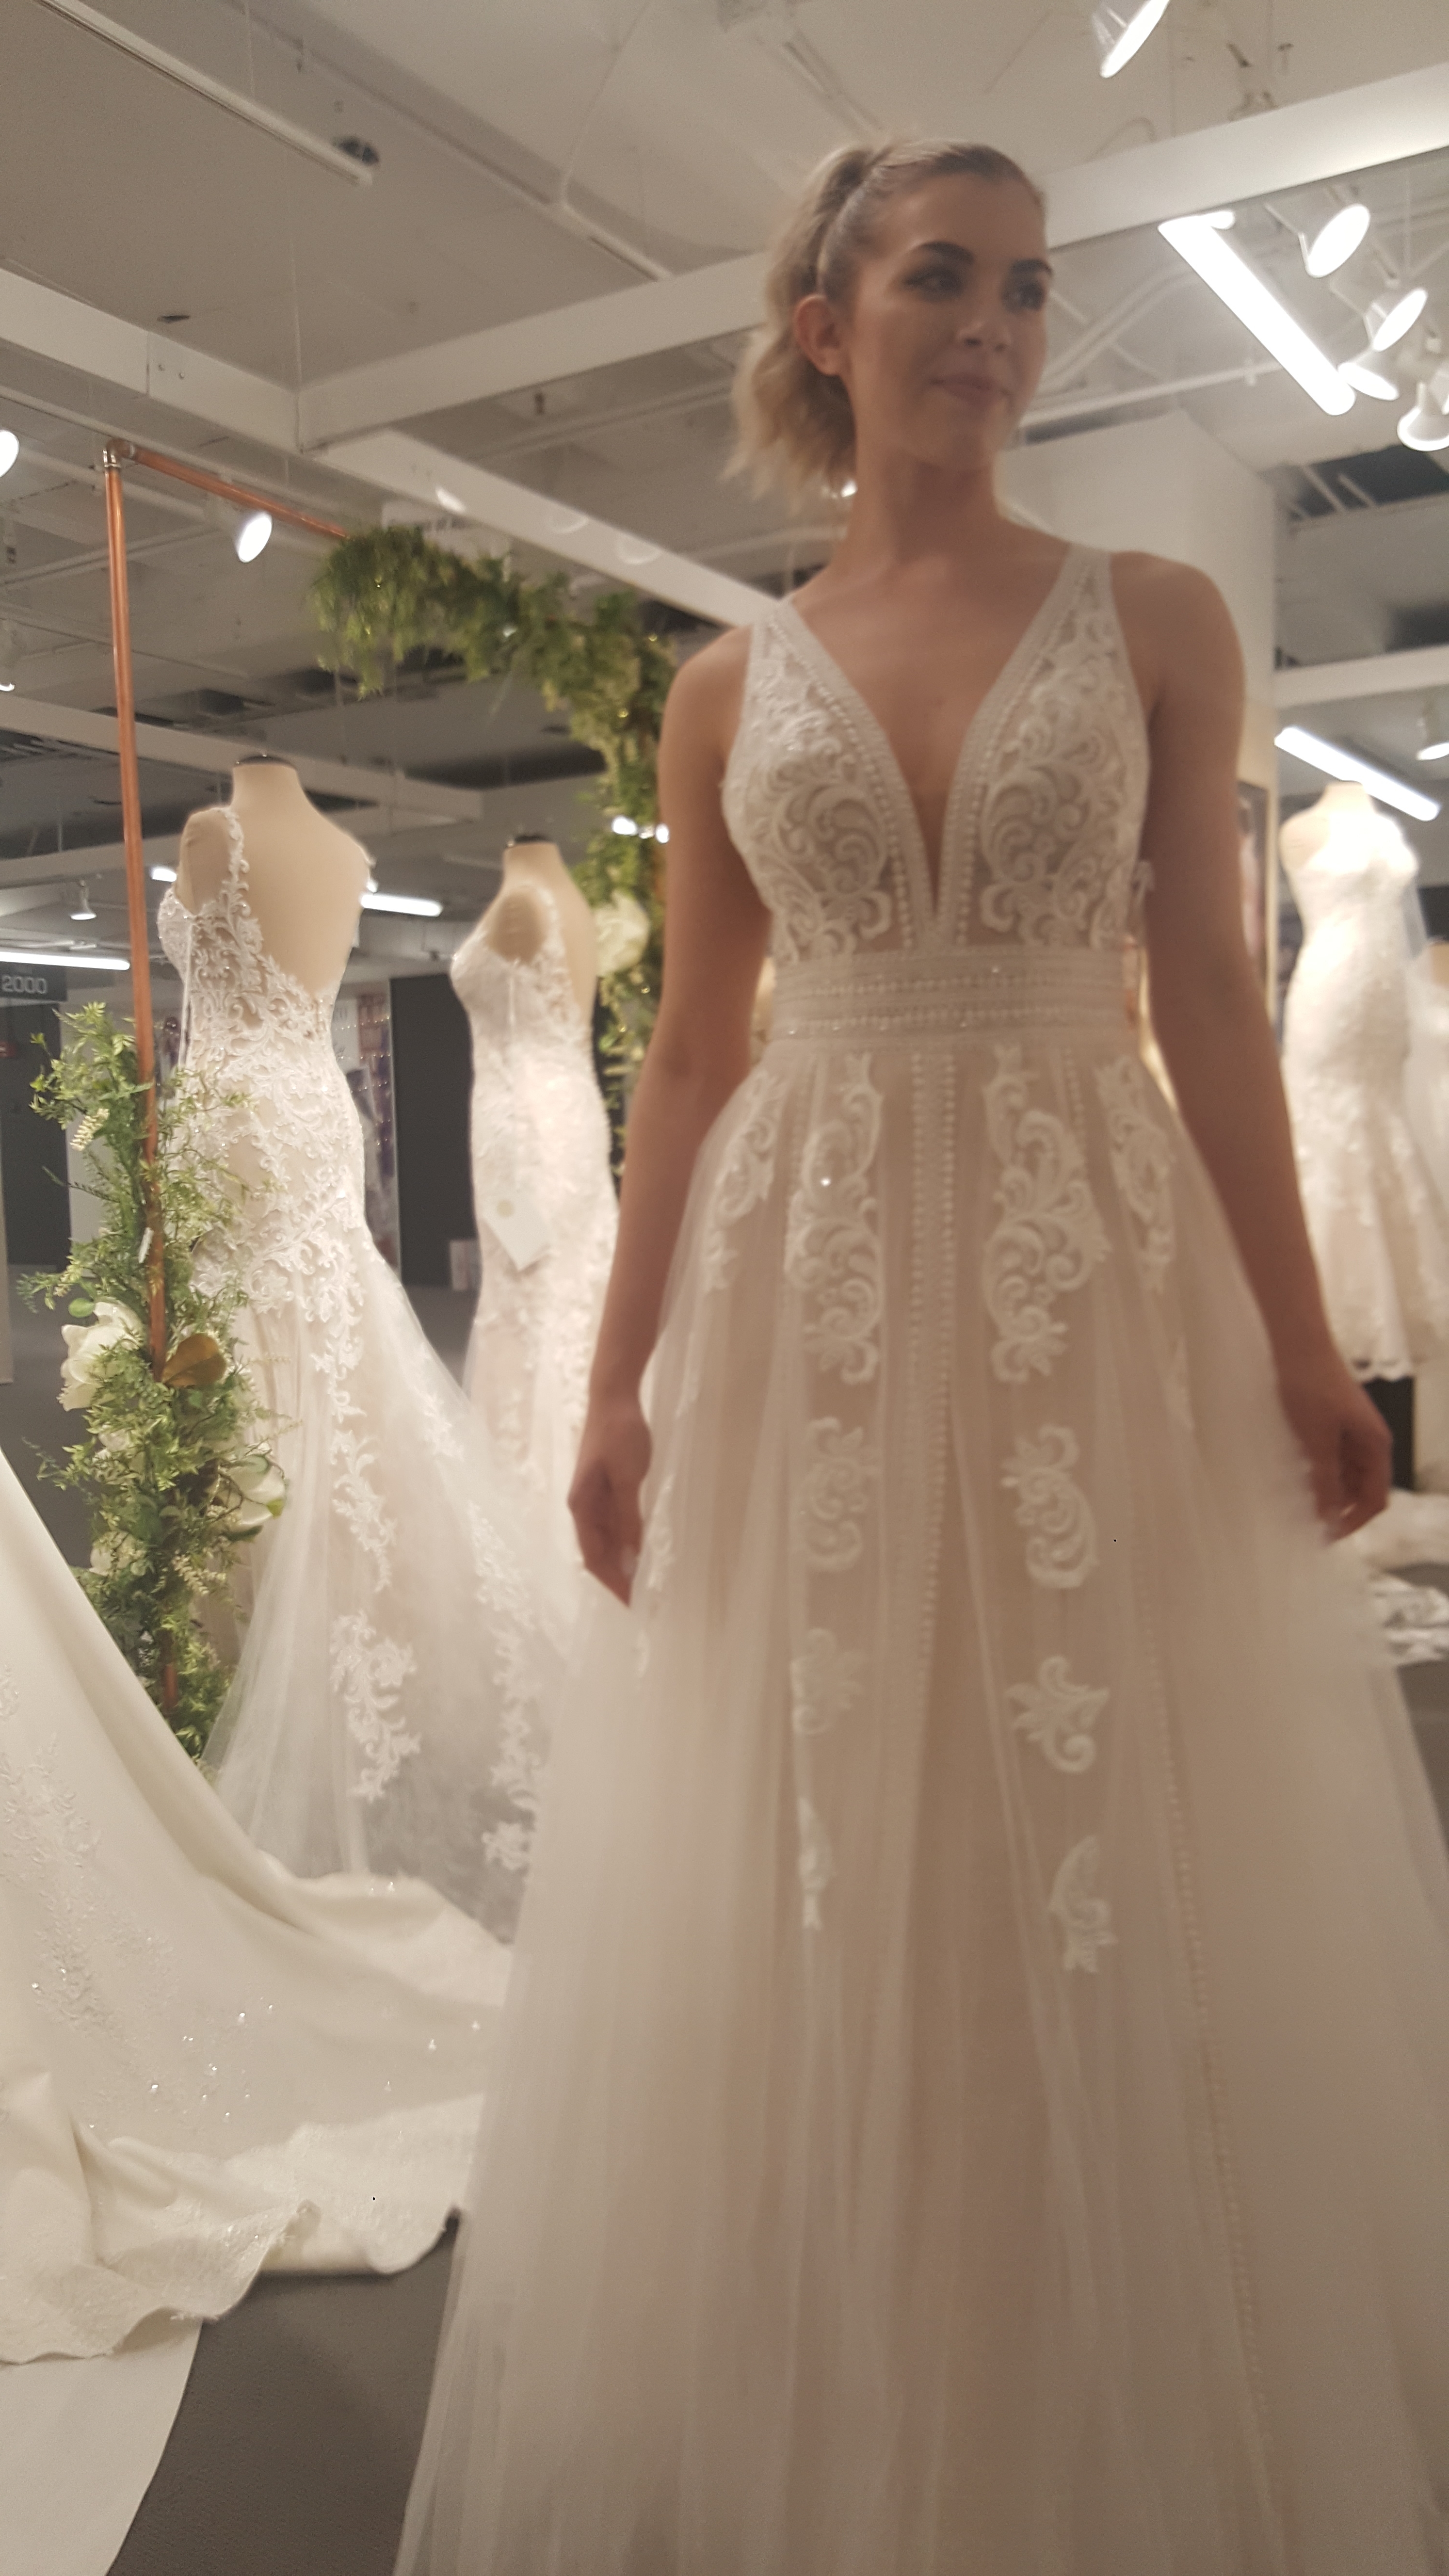 Chicago National Bridal Market ⋆ Precious Memories Bridal Shop